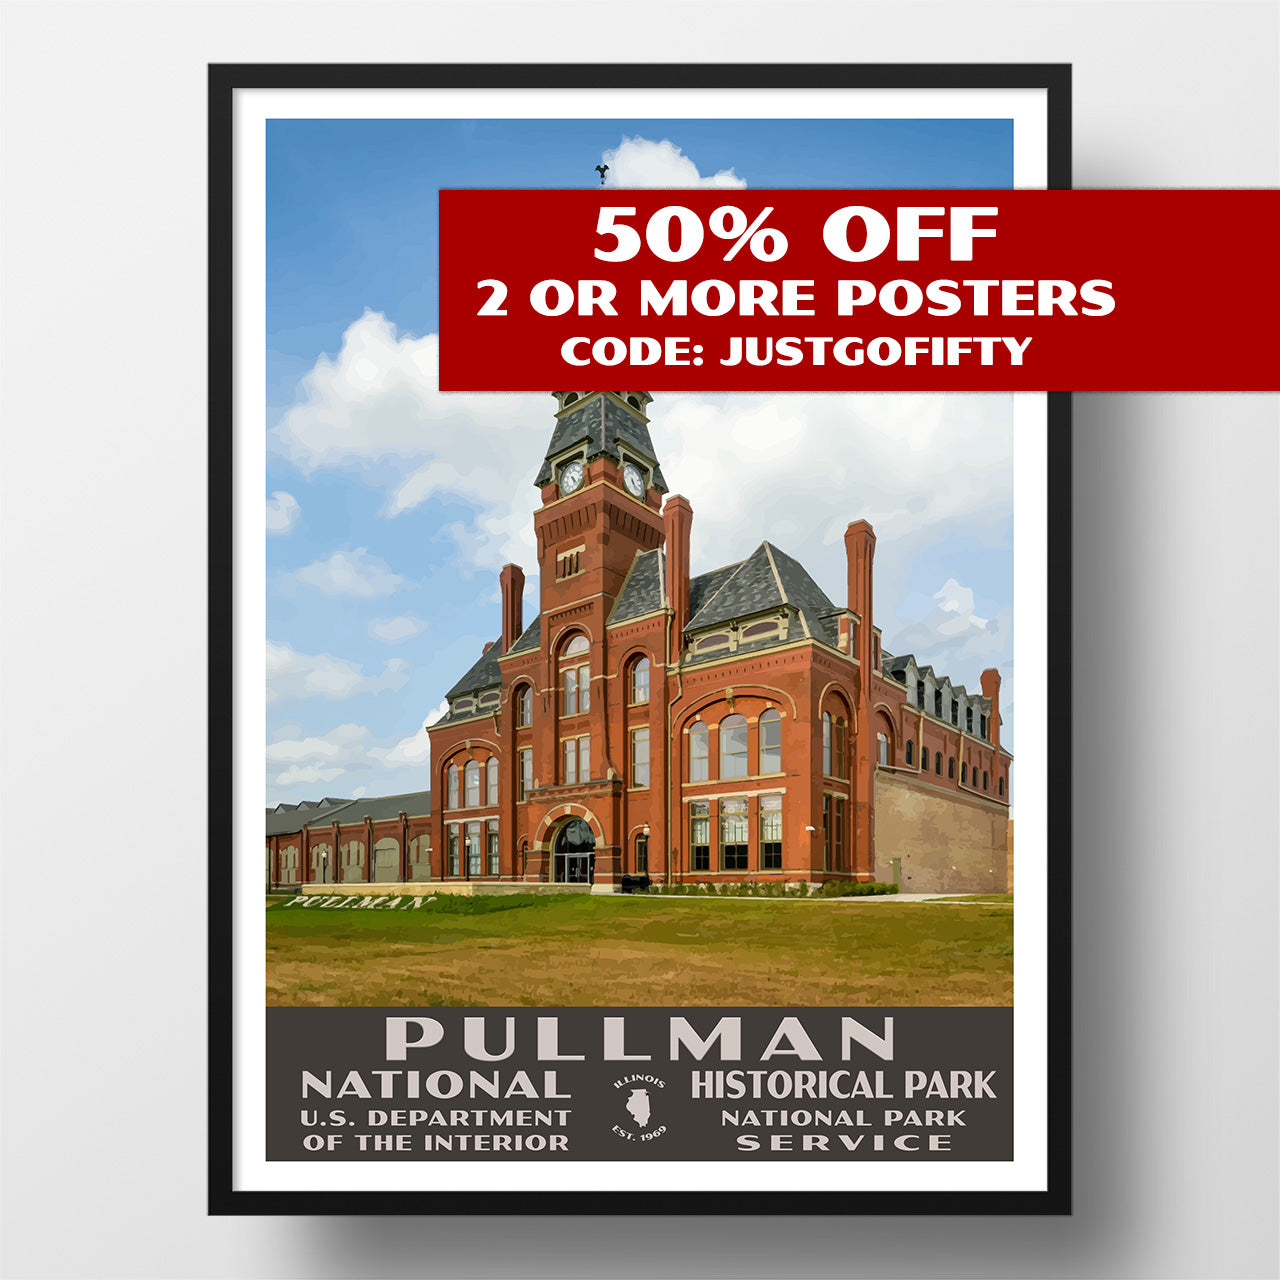 Pullman National Historical Park poster